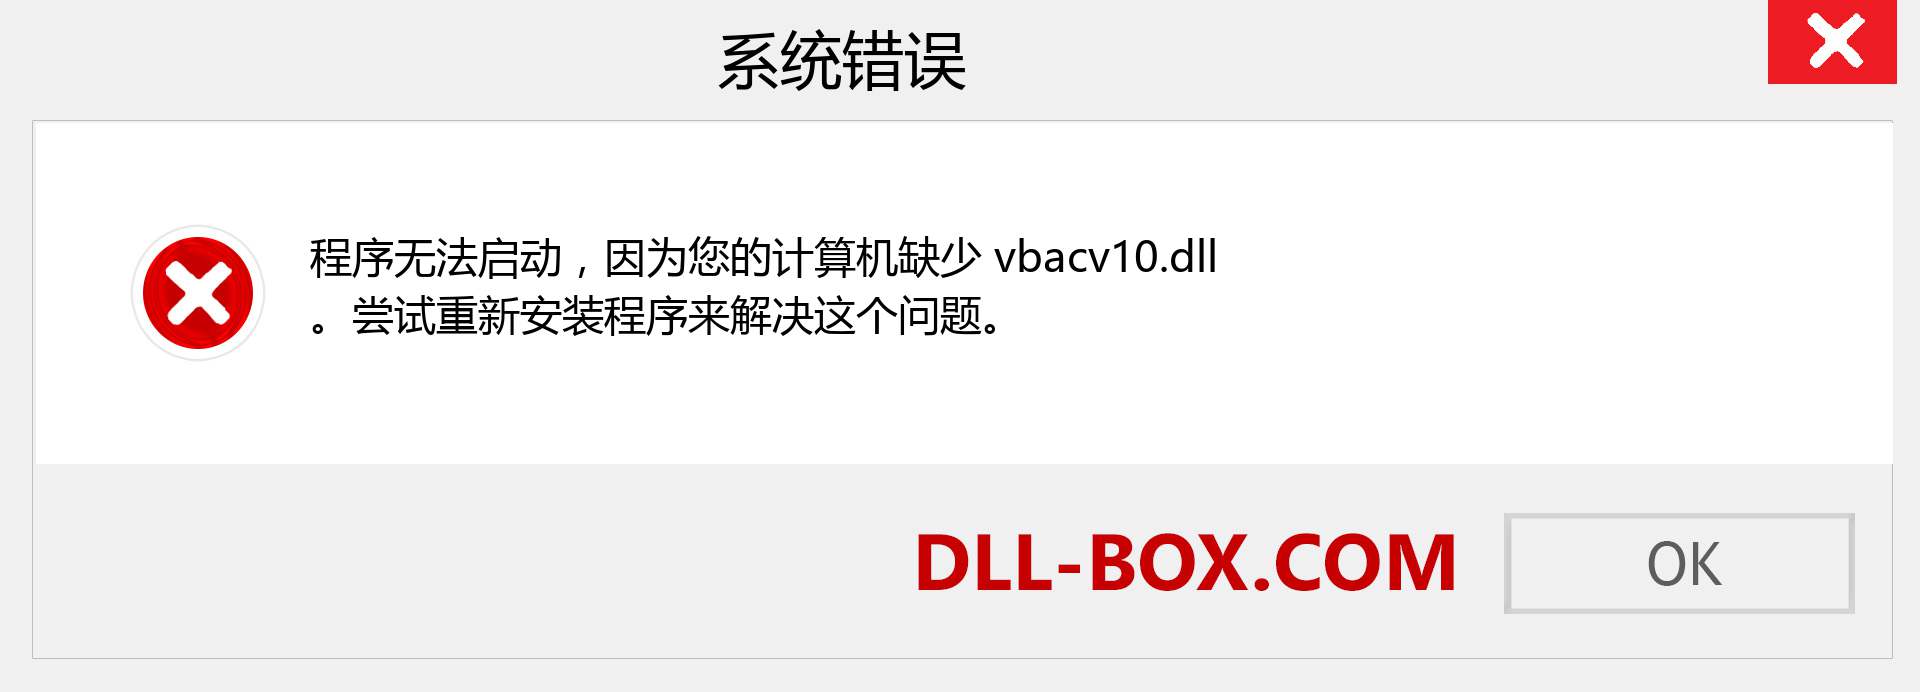 vbacv10.dll 文件丢失？。 适用于 Windows 7、8、10 的下载 - 修复 Windows、照片、图像上的 vbacv10 dll 丢失错误